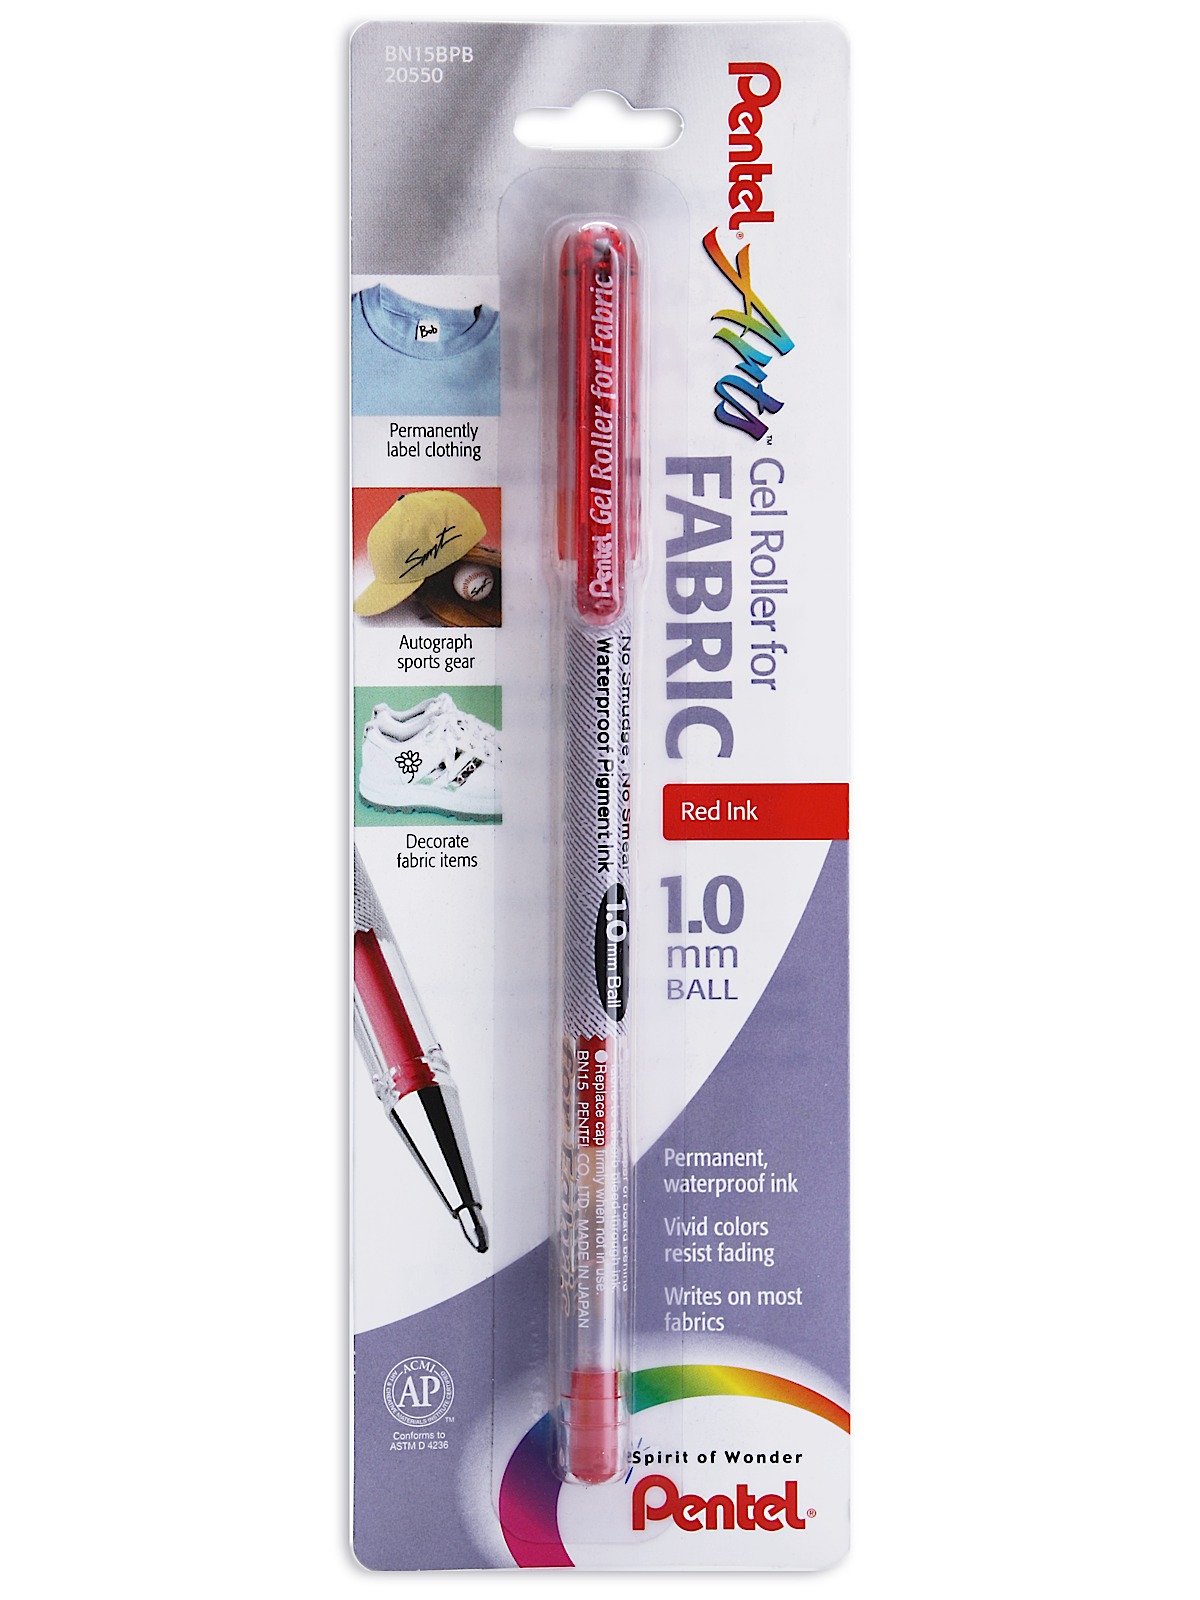 Acid Free Gel Ink Pens for scrapbooking